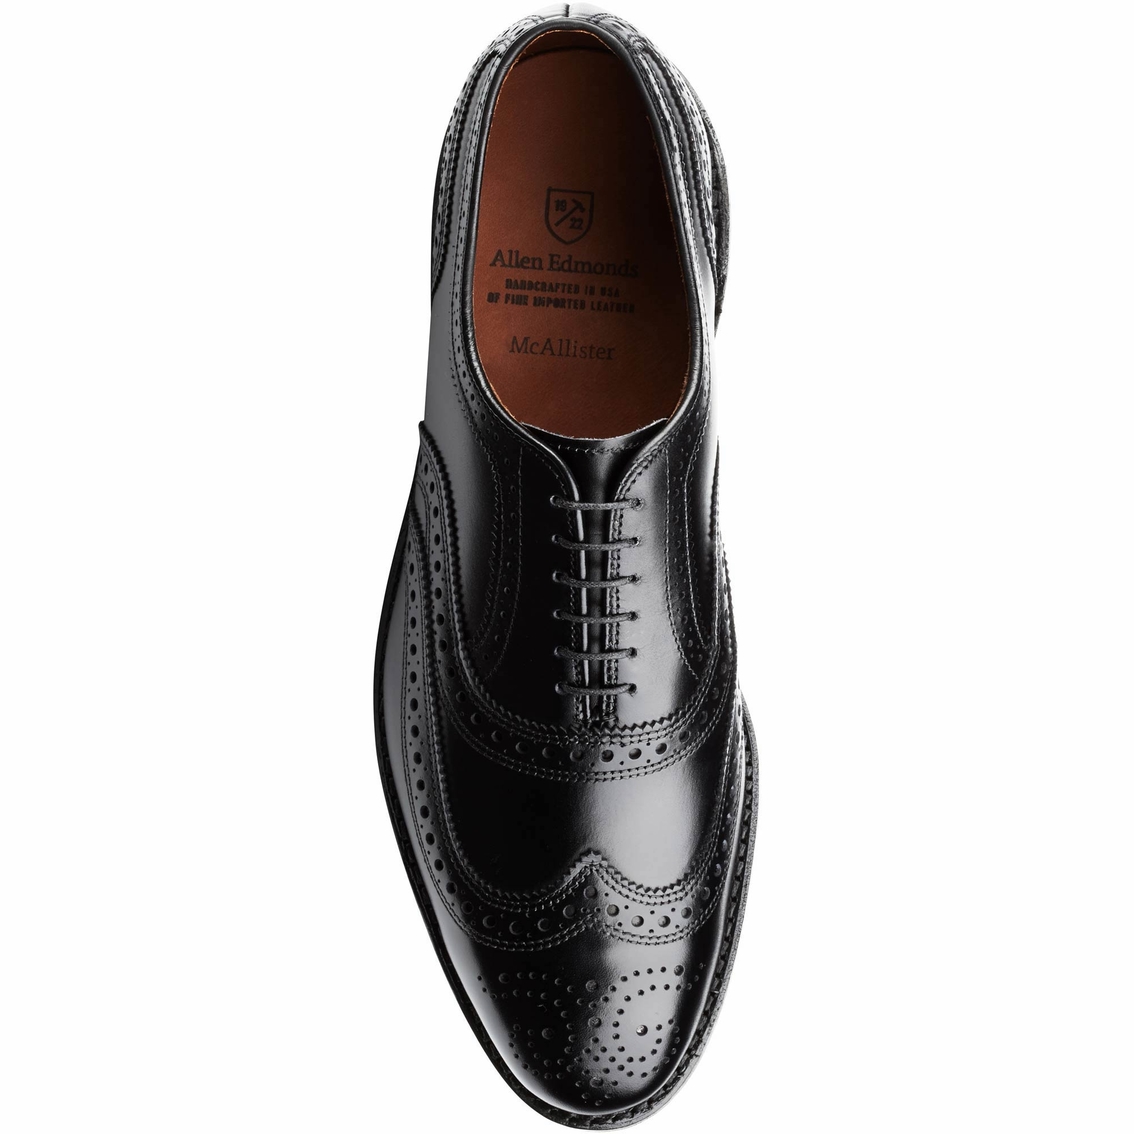 Allen Edmonds McAllister Shoes - Image 3 of 5